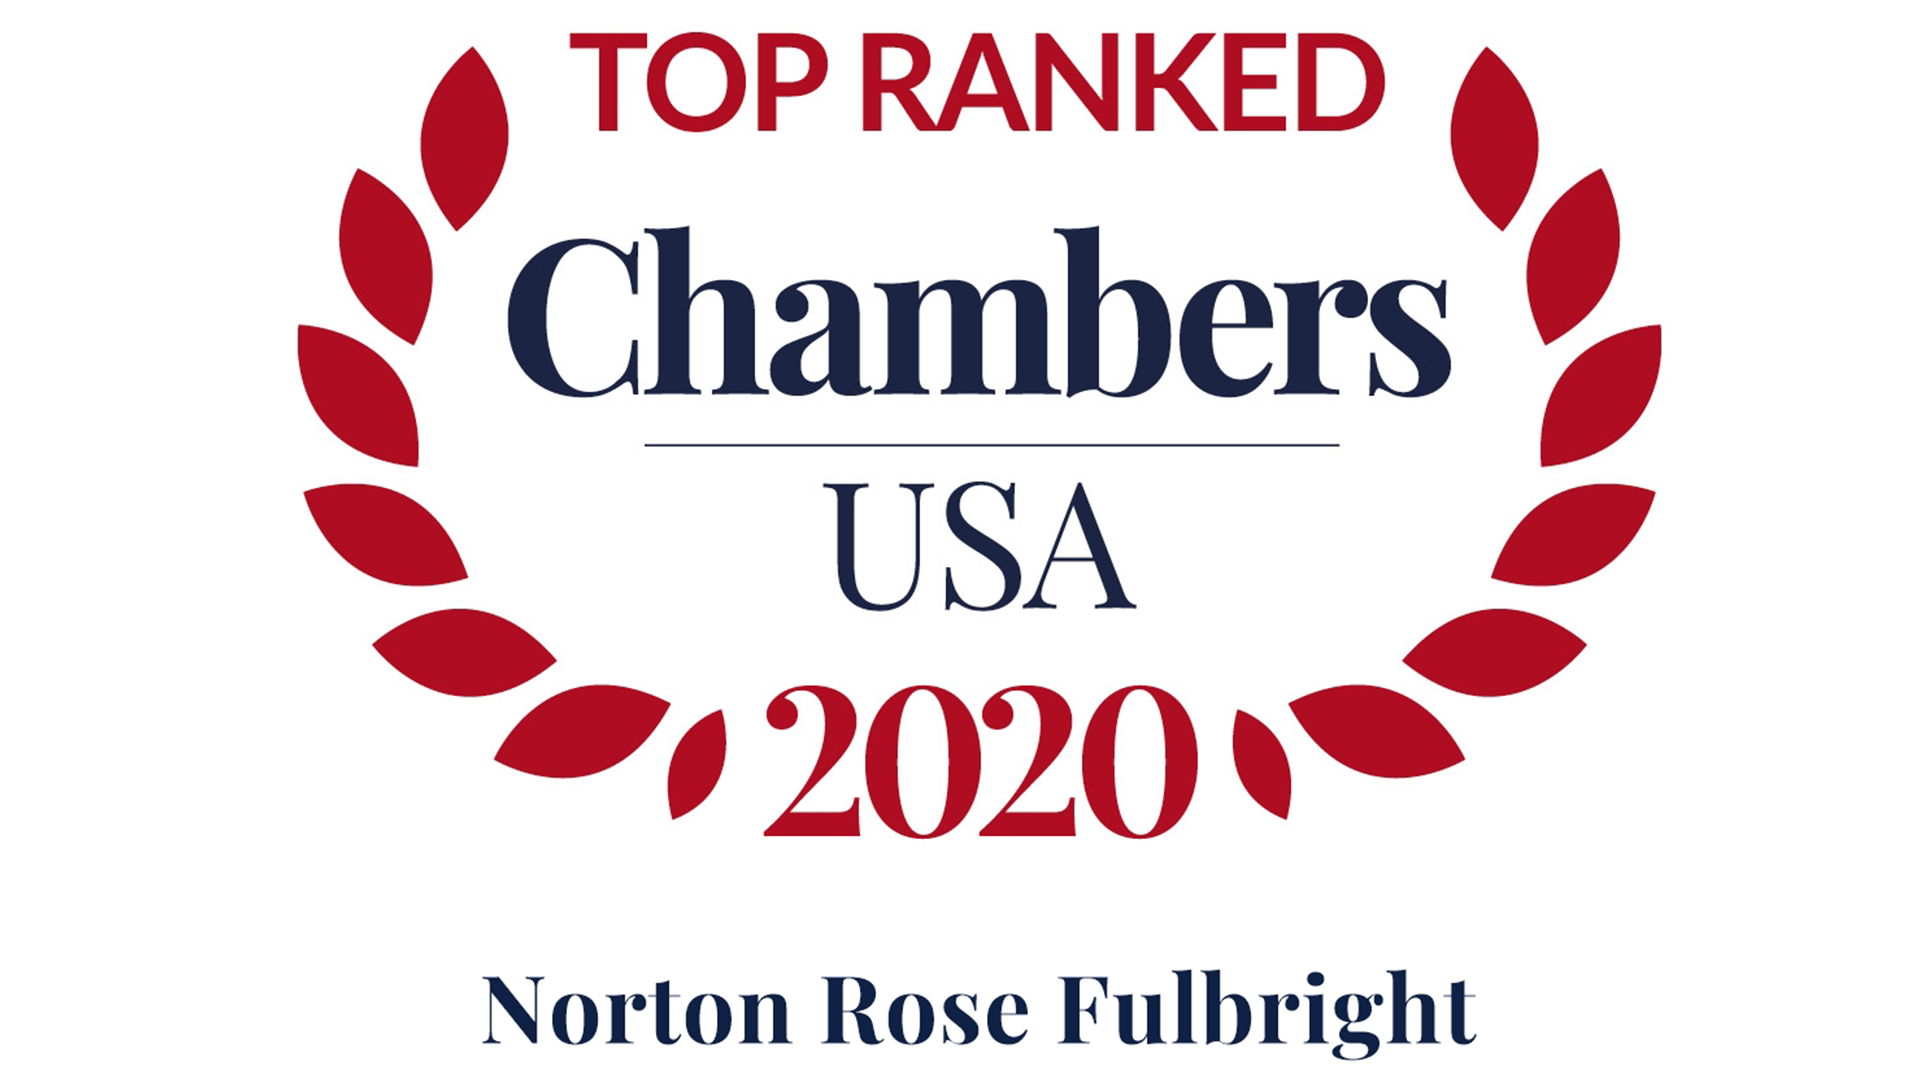 Top ranked Chambers USA 2020